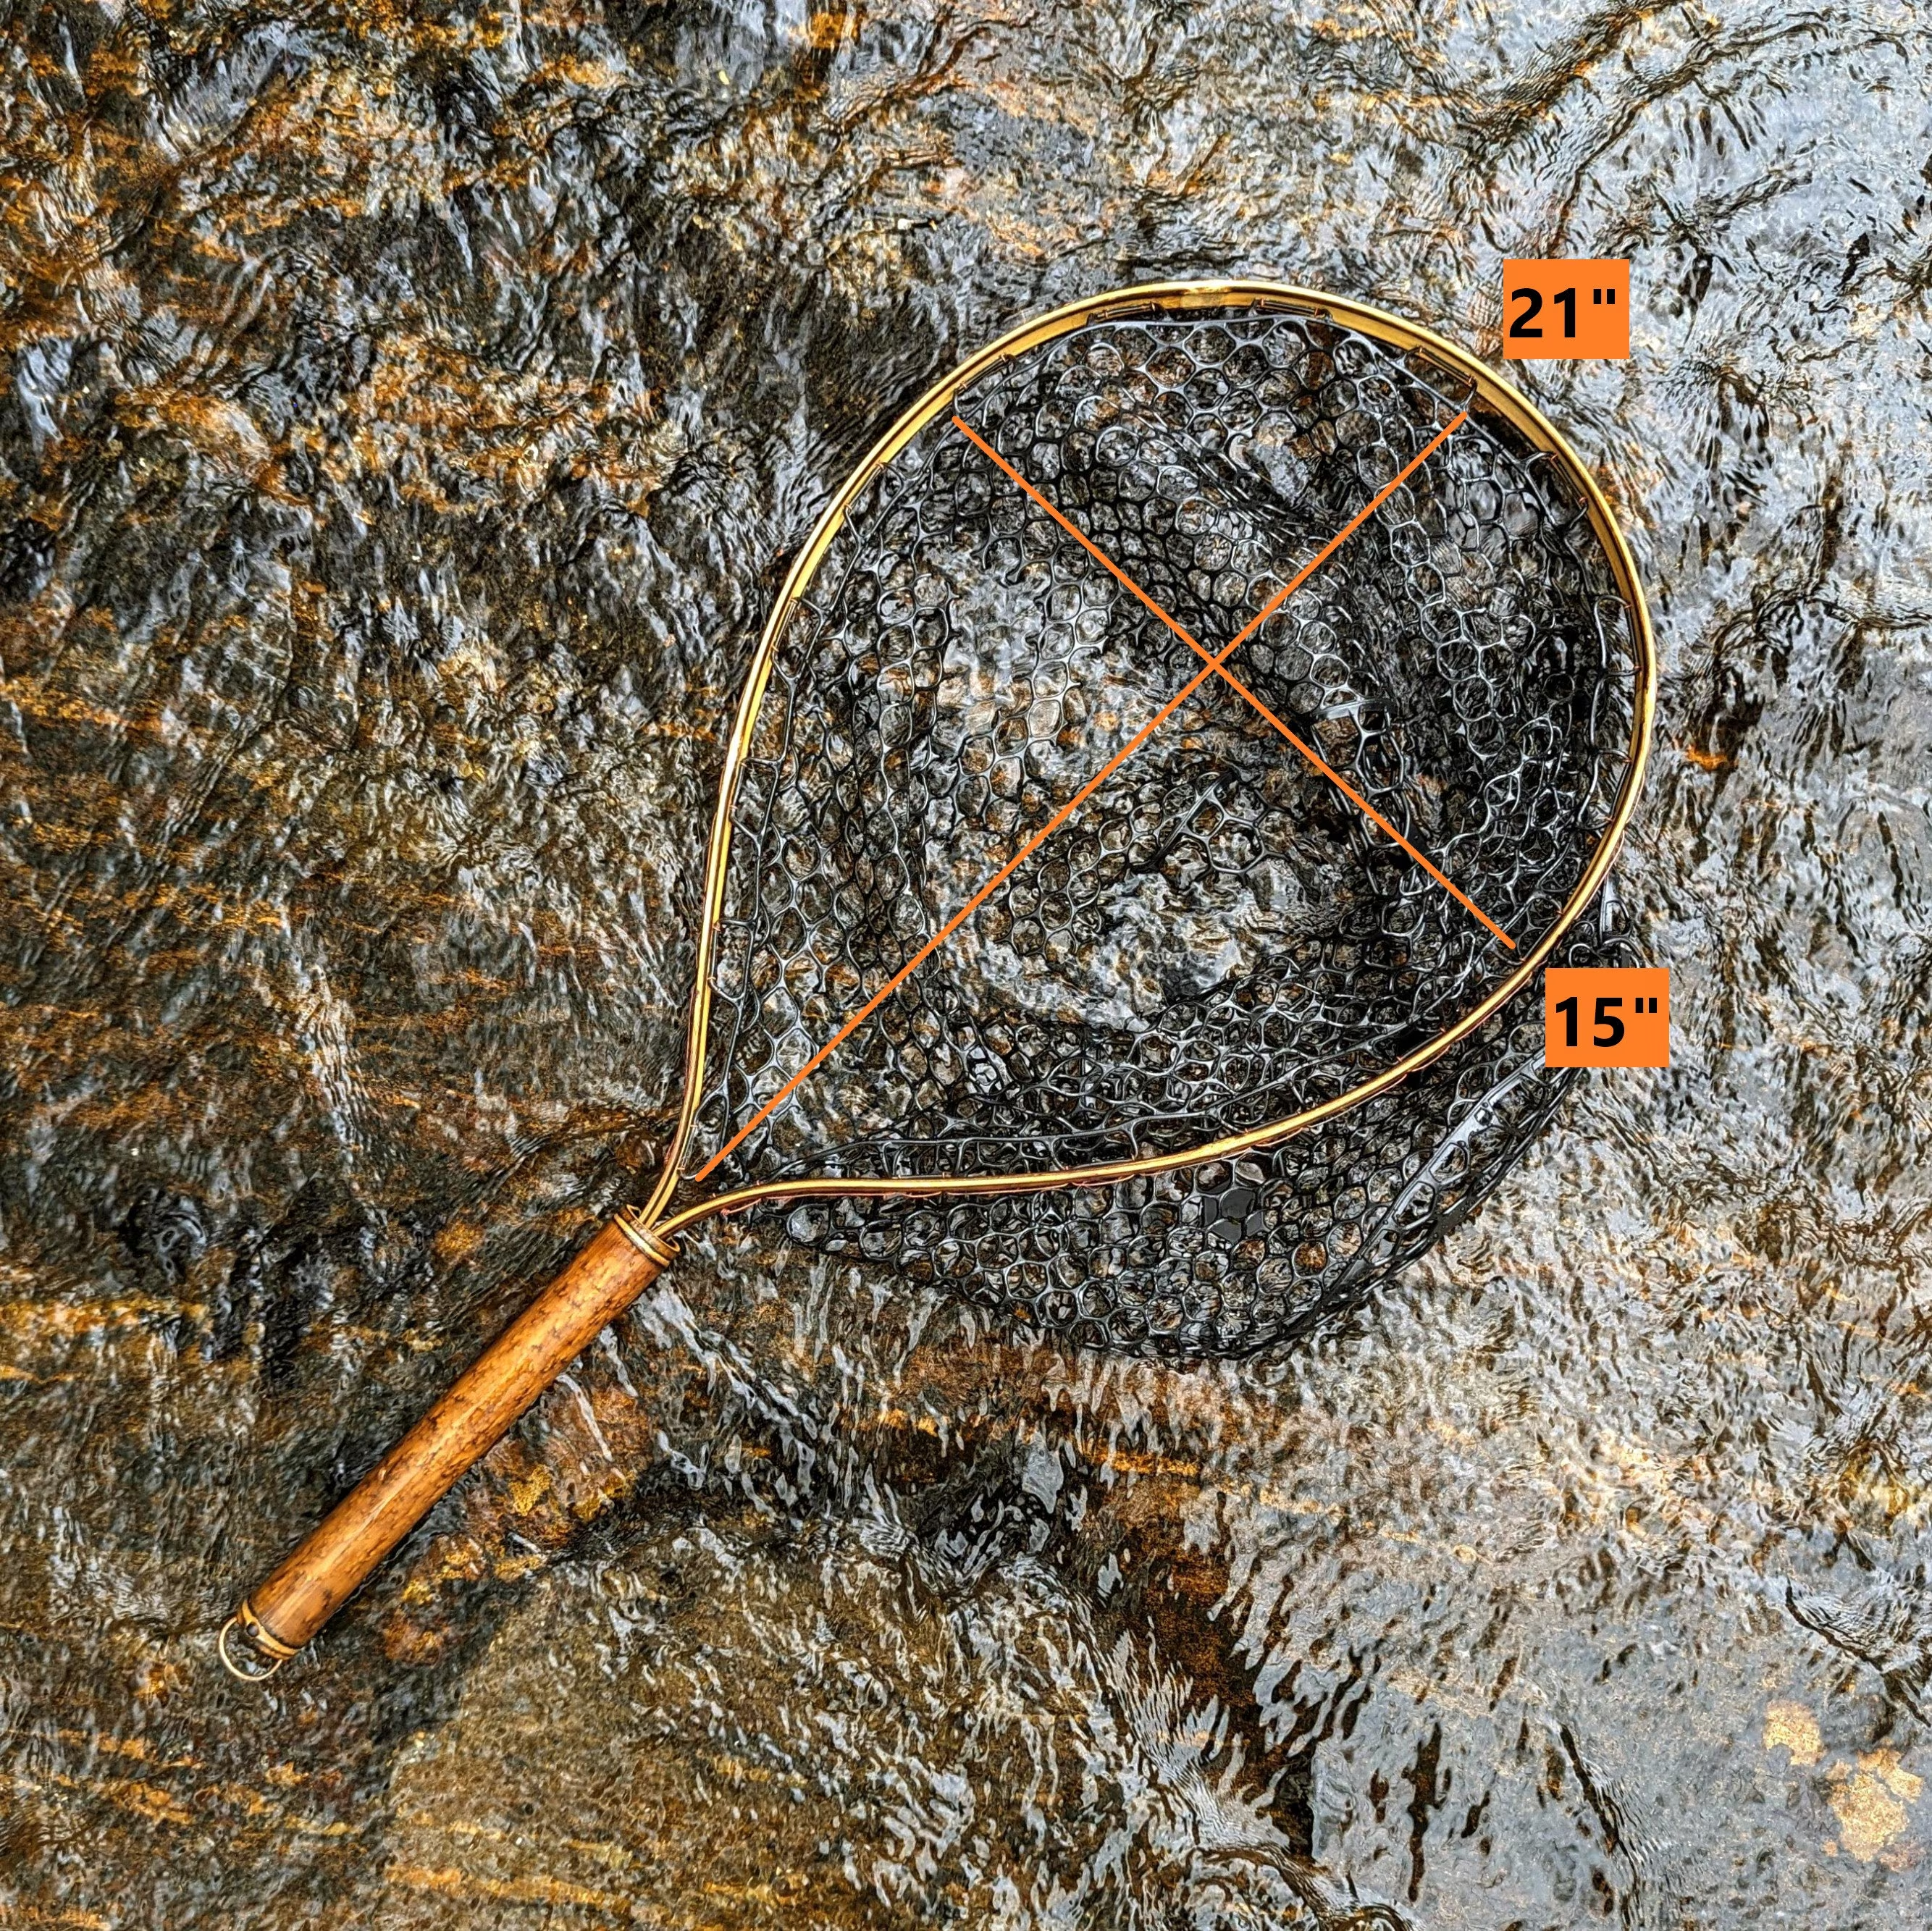 Downstream – Hellbender Nets